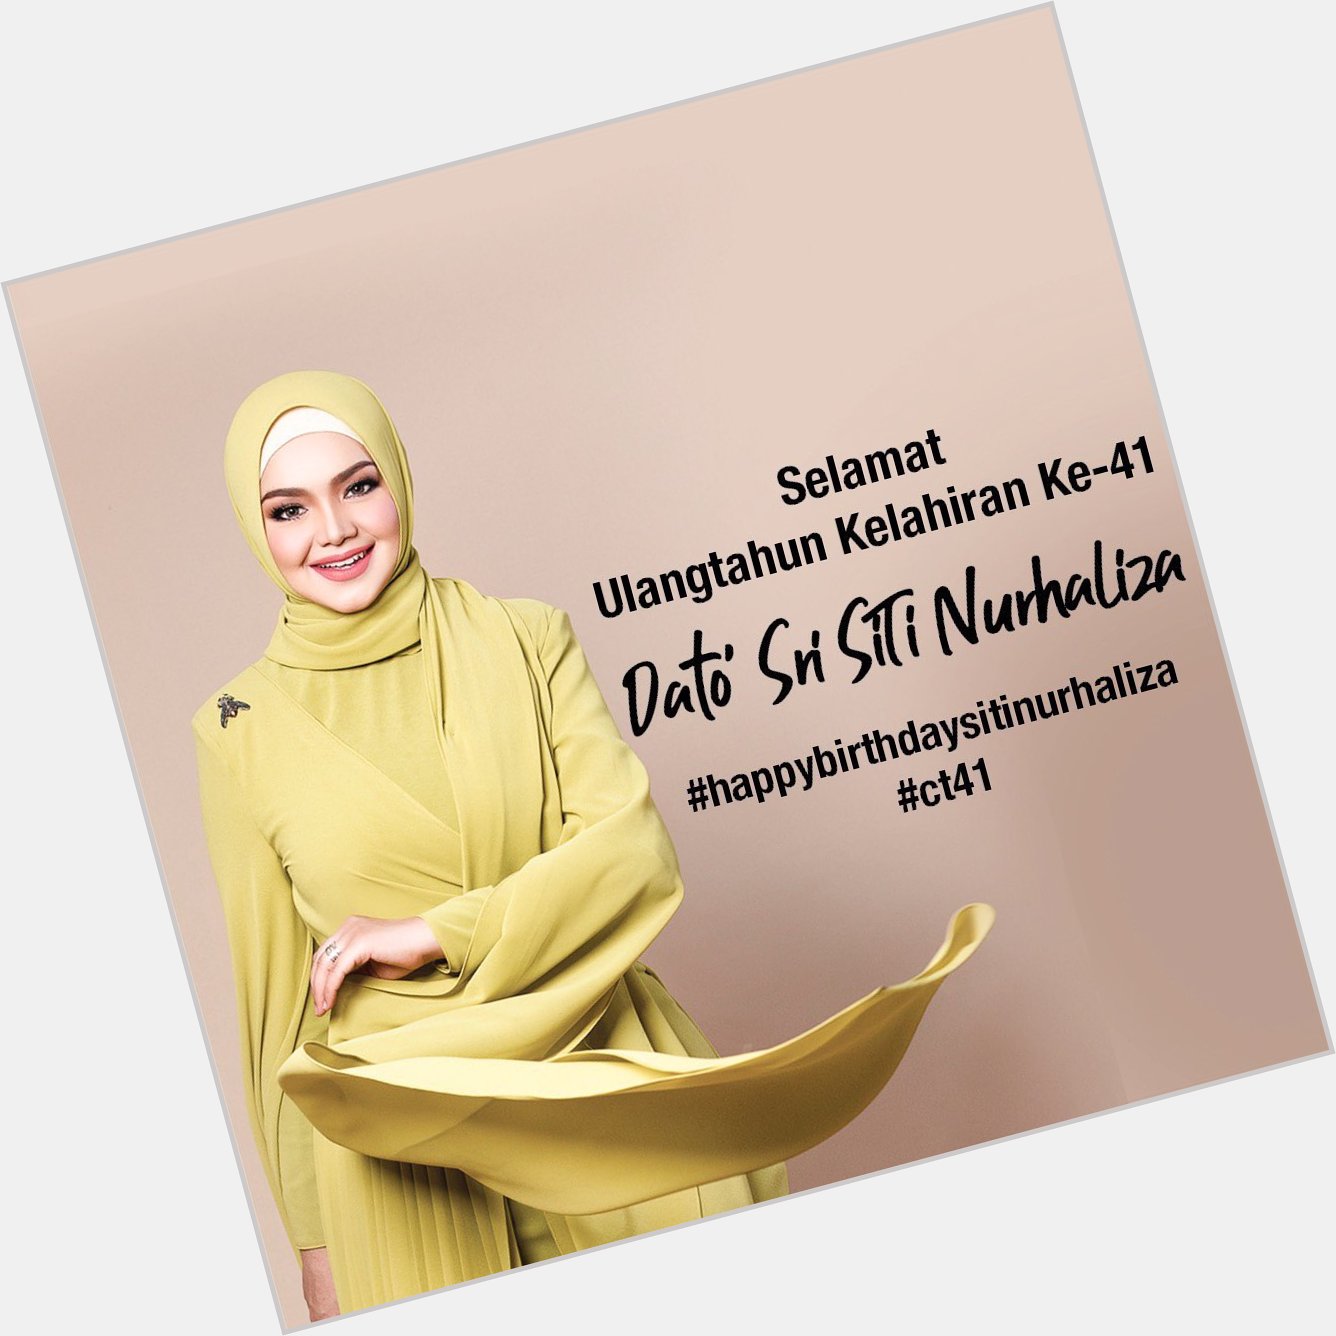 Happy birthday si jantung hati Malaysia Siti Nurhaliza  